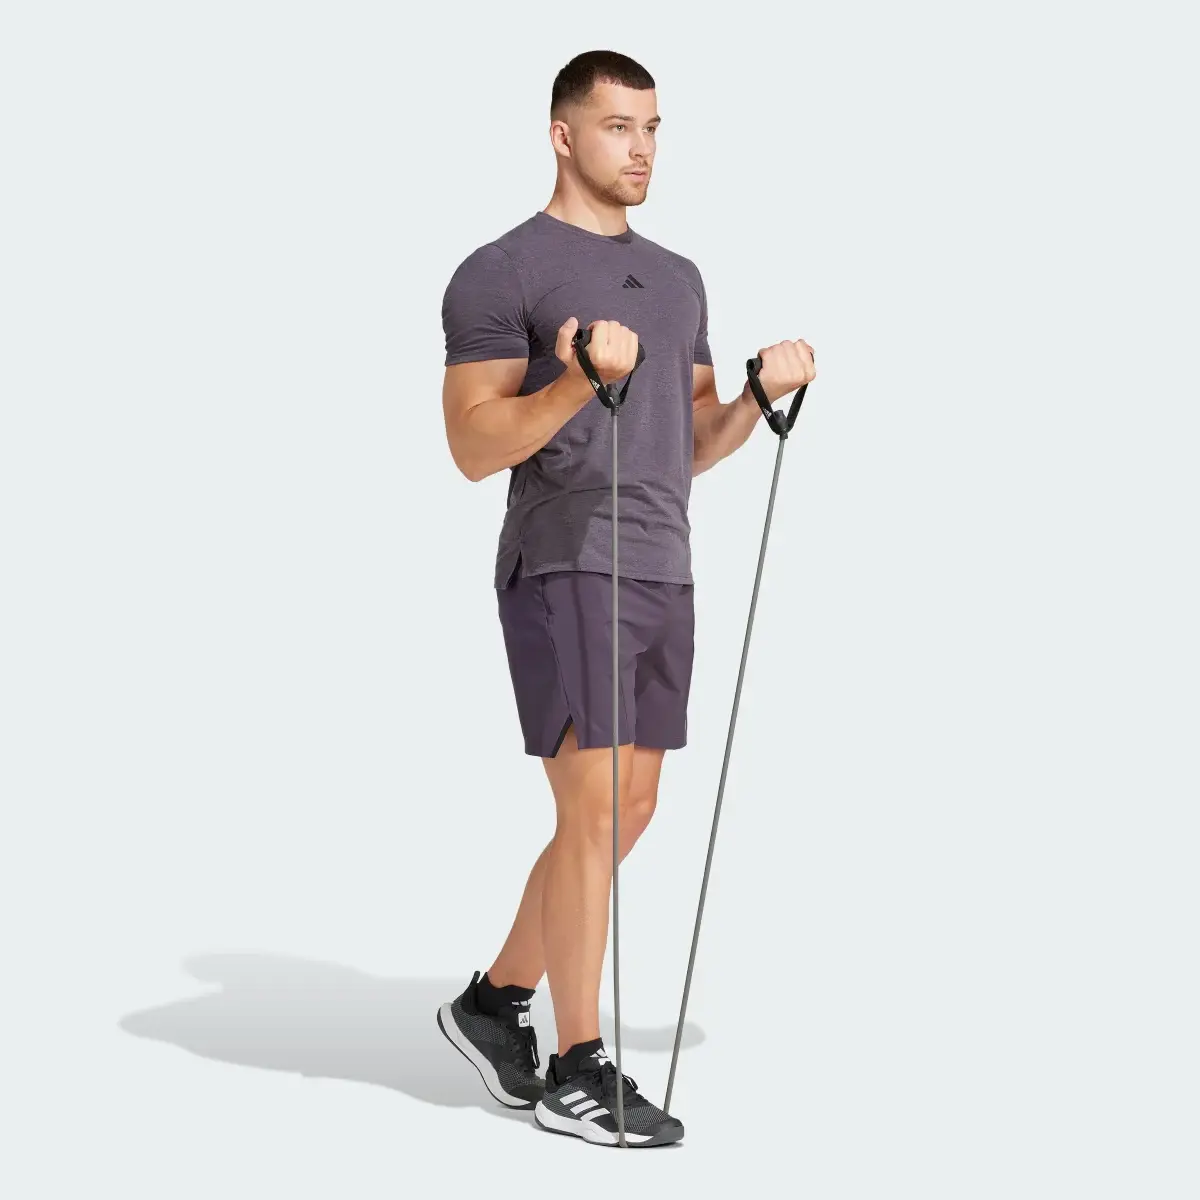 Adidas Pantalón corto Designed for Training Workout. 3